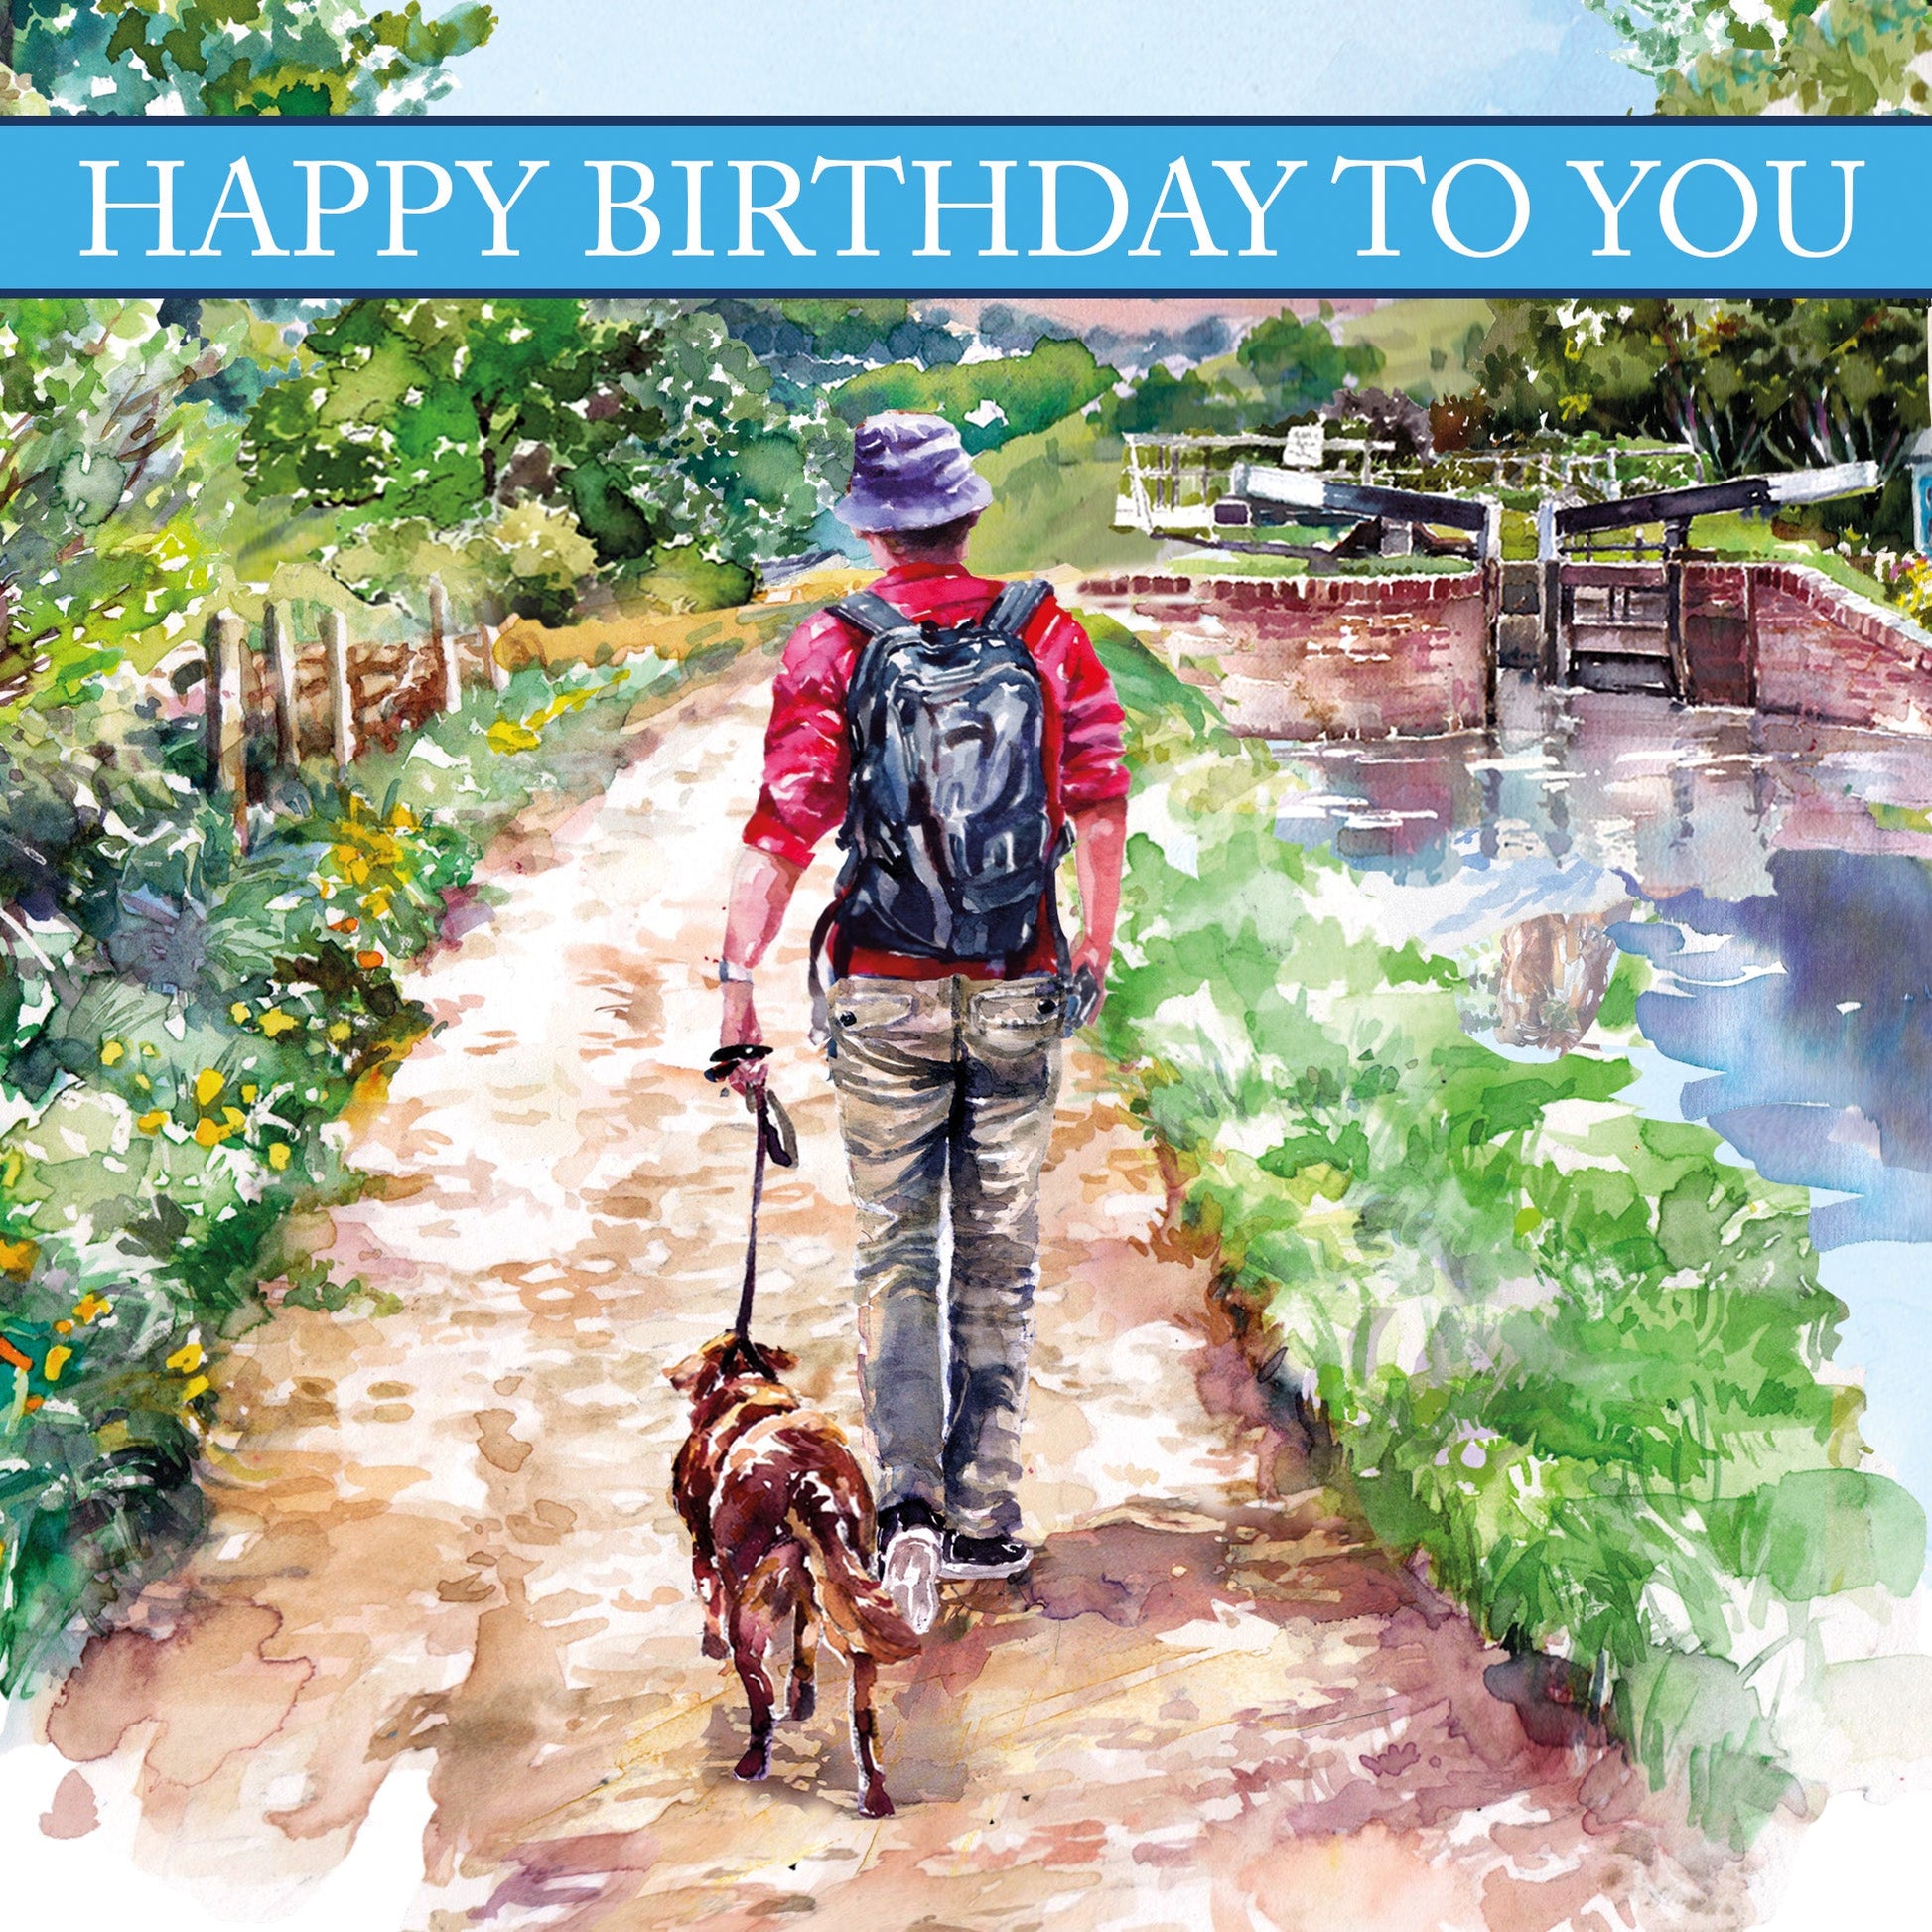 Dog Walking Canal Birthday Greetings Card